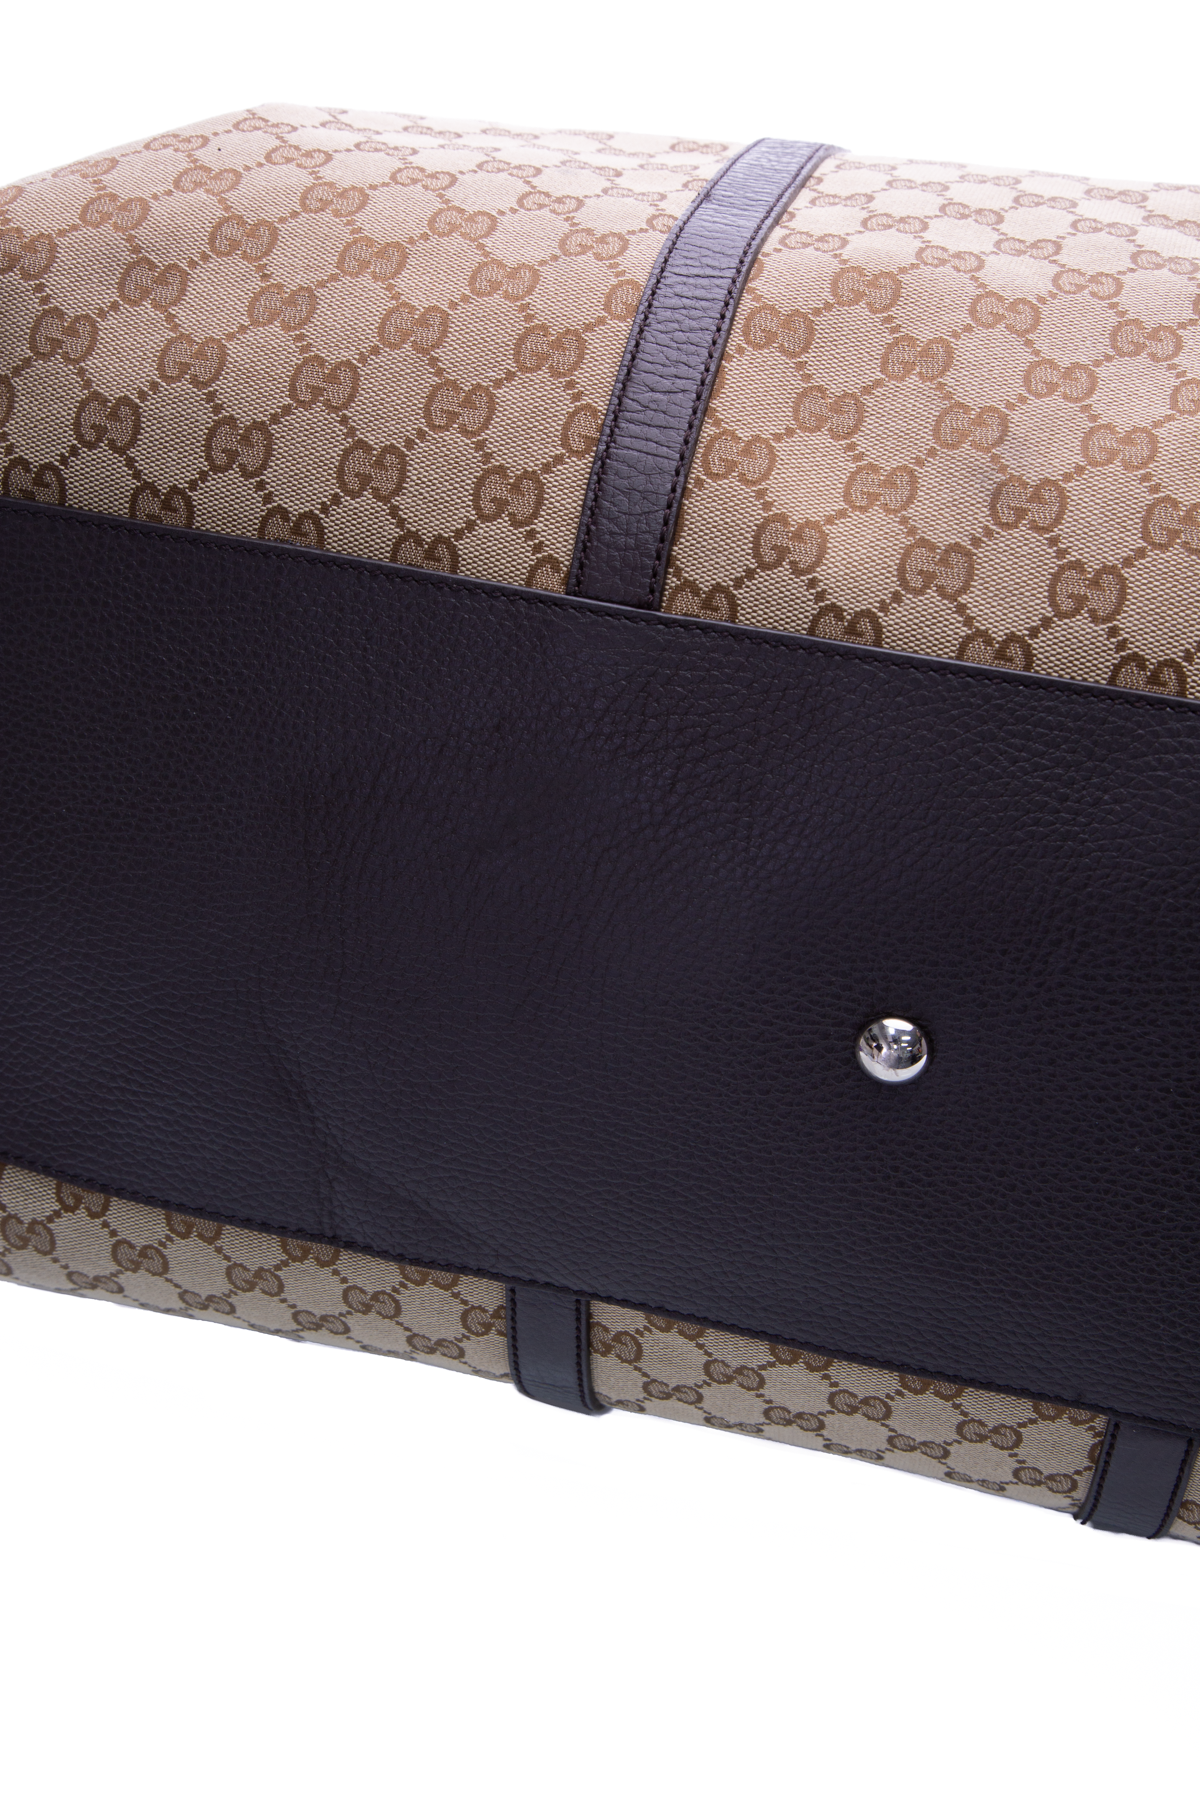 Gucci GG Supreme duffle | Bags, Designer duffle bags, Stylish luggage